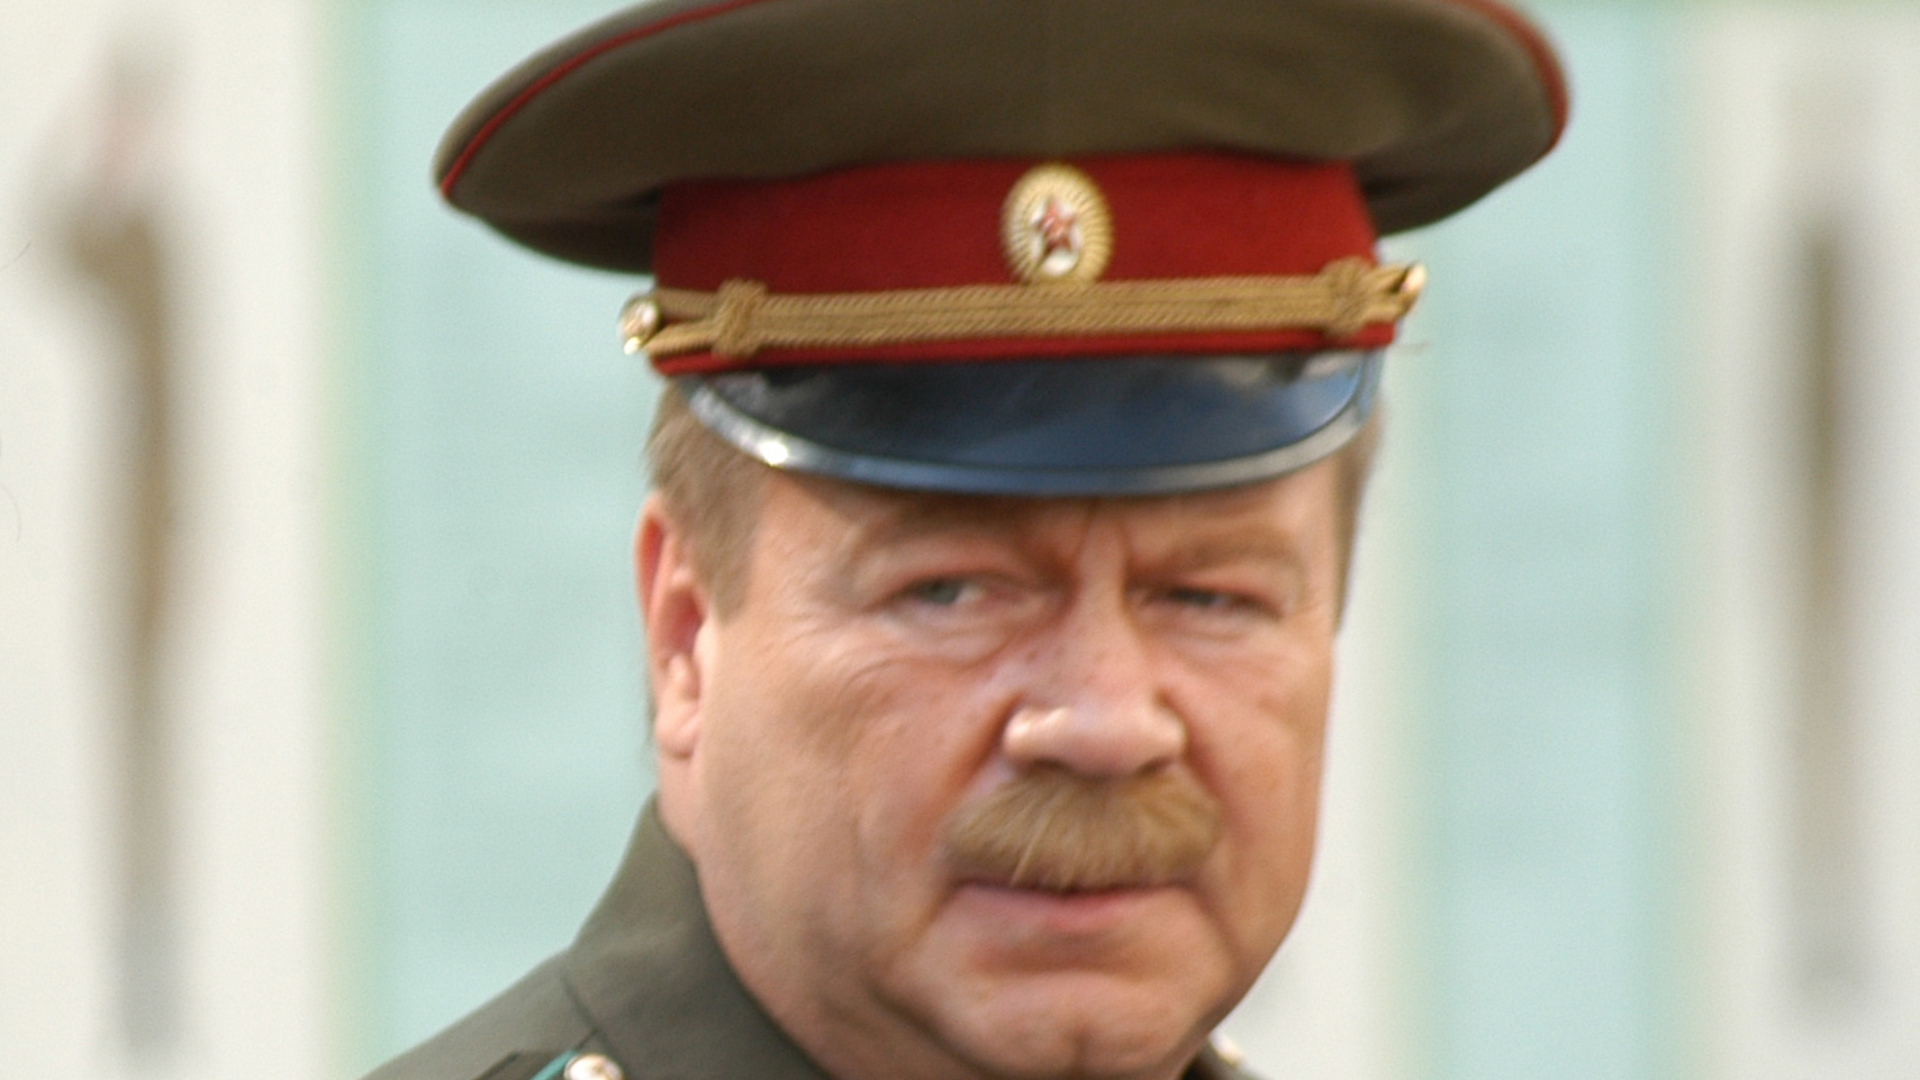 Сергей Селин